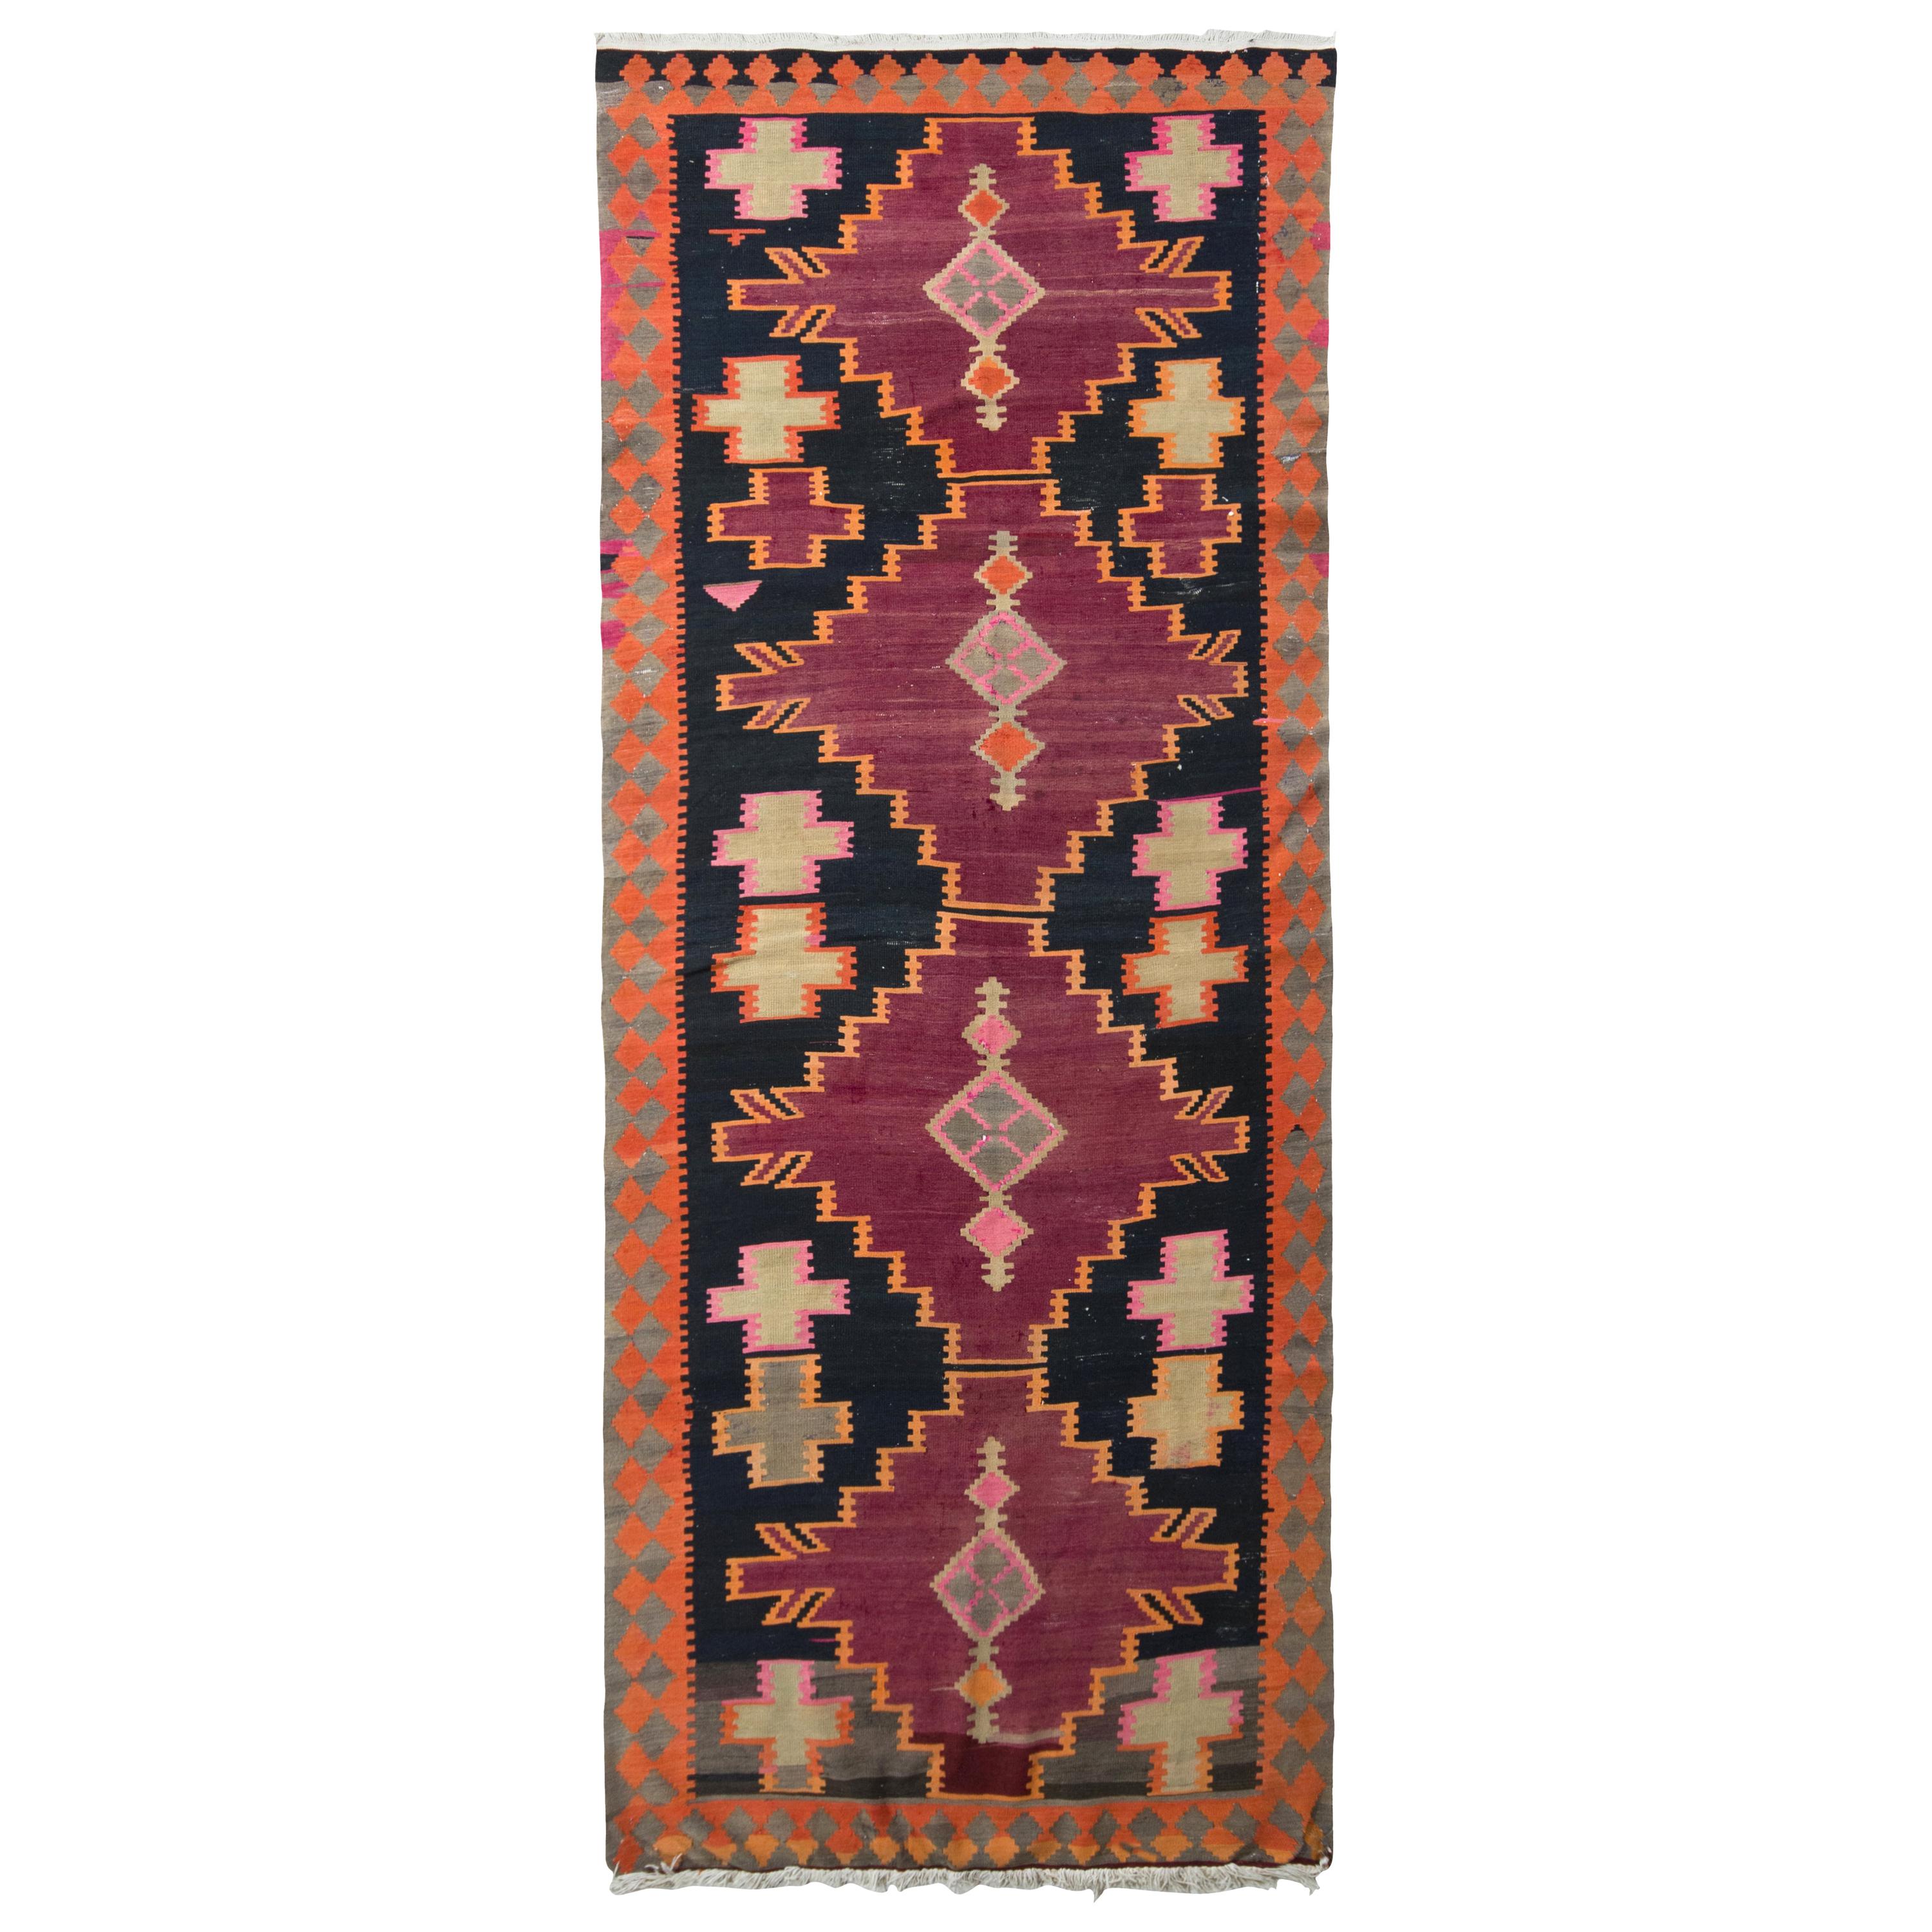 Handwoven Antique Kilim Rug in Black and Orange Geometric Pattern b Rug & Kilim